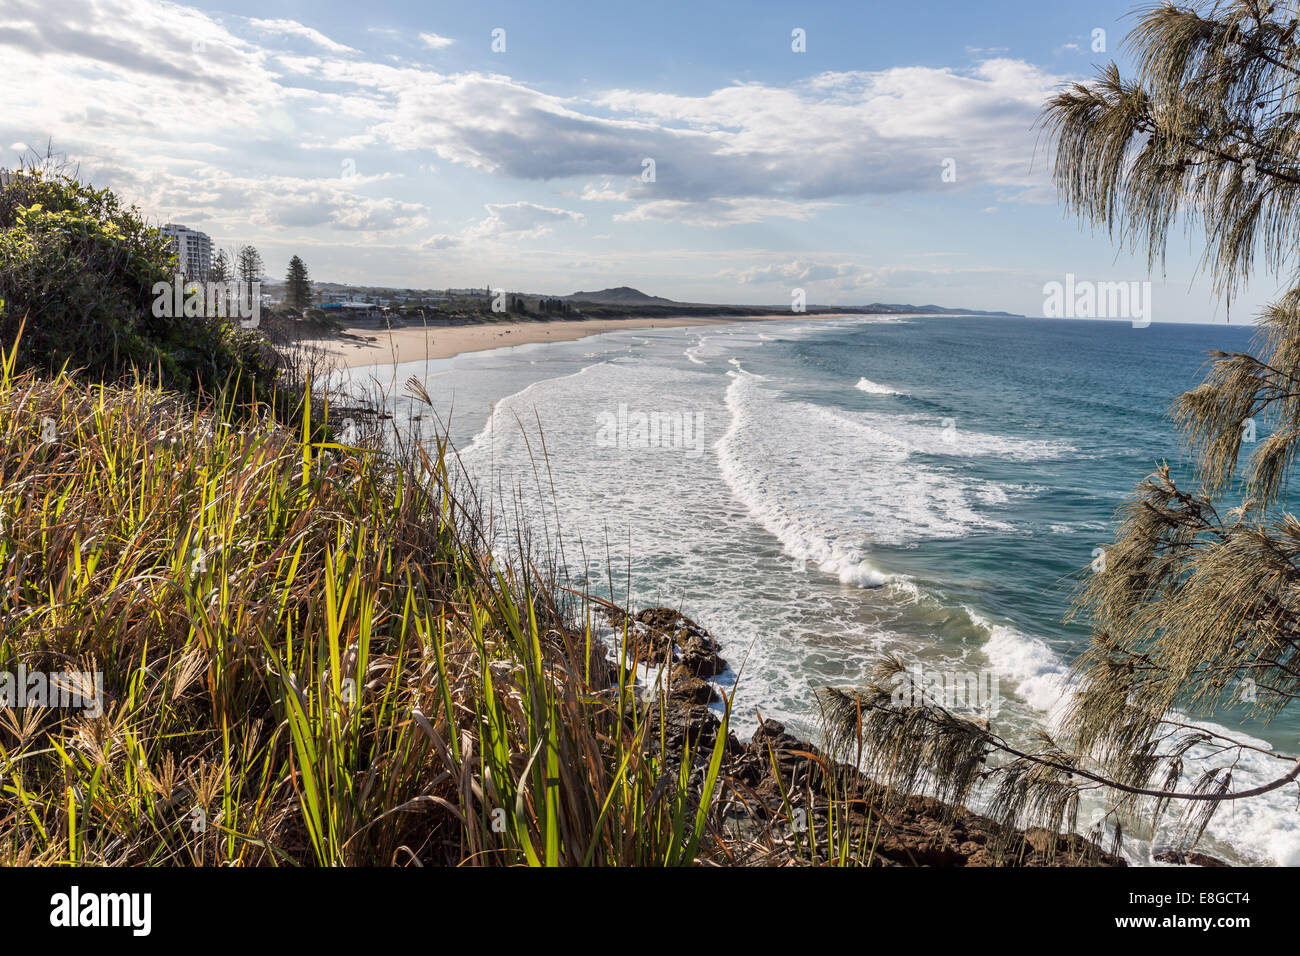 Dune vegetation on headland overlooking Coolum Beach, Sunshine Coast, Queensland, Australia Stock Photo